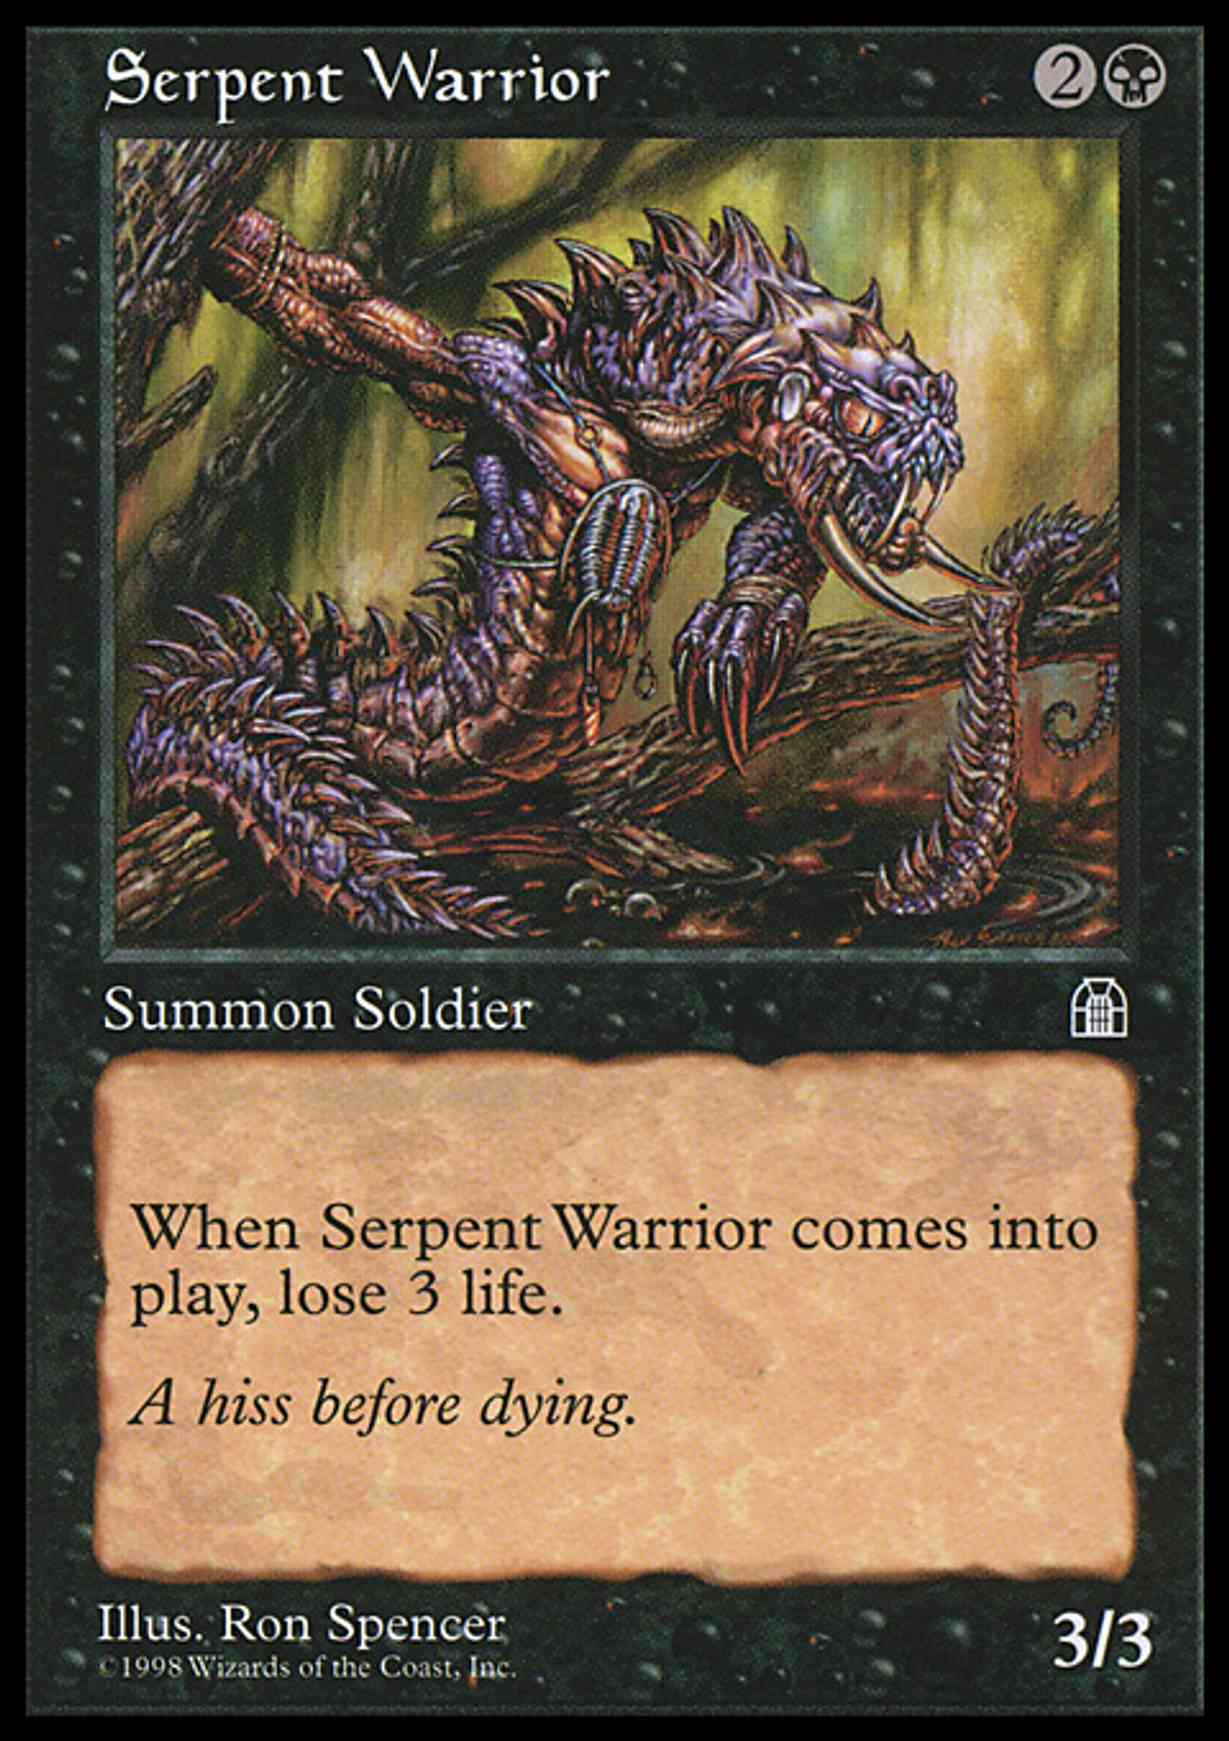 Serpent Warrior magic card front